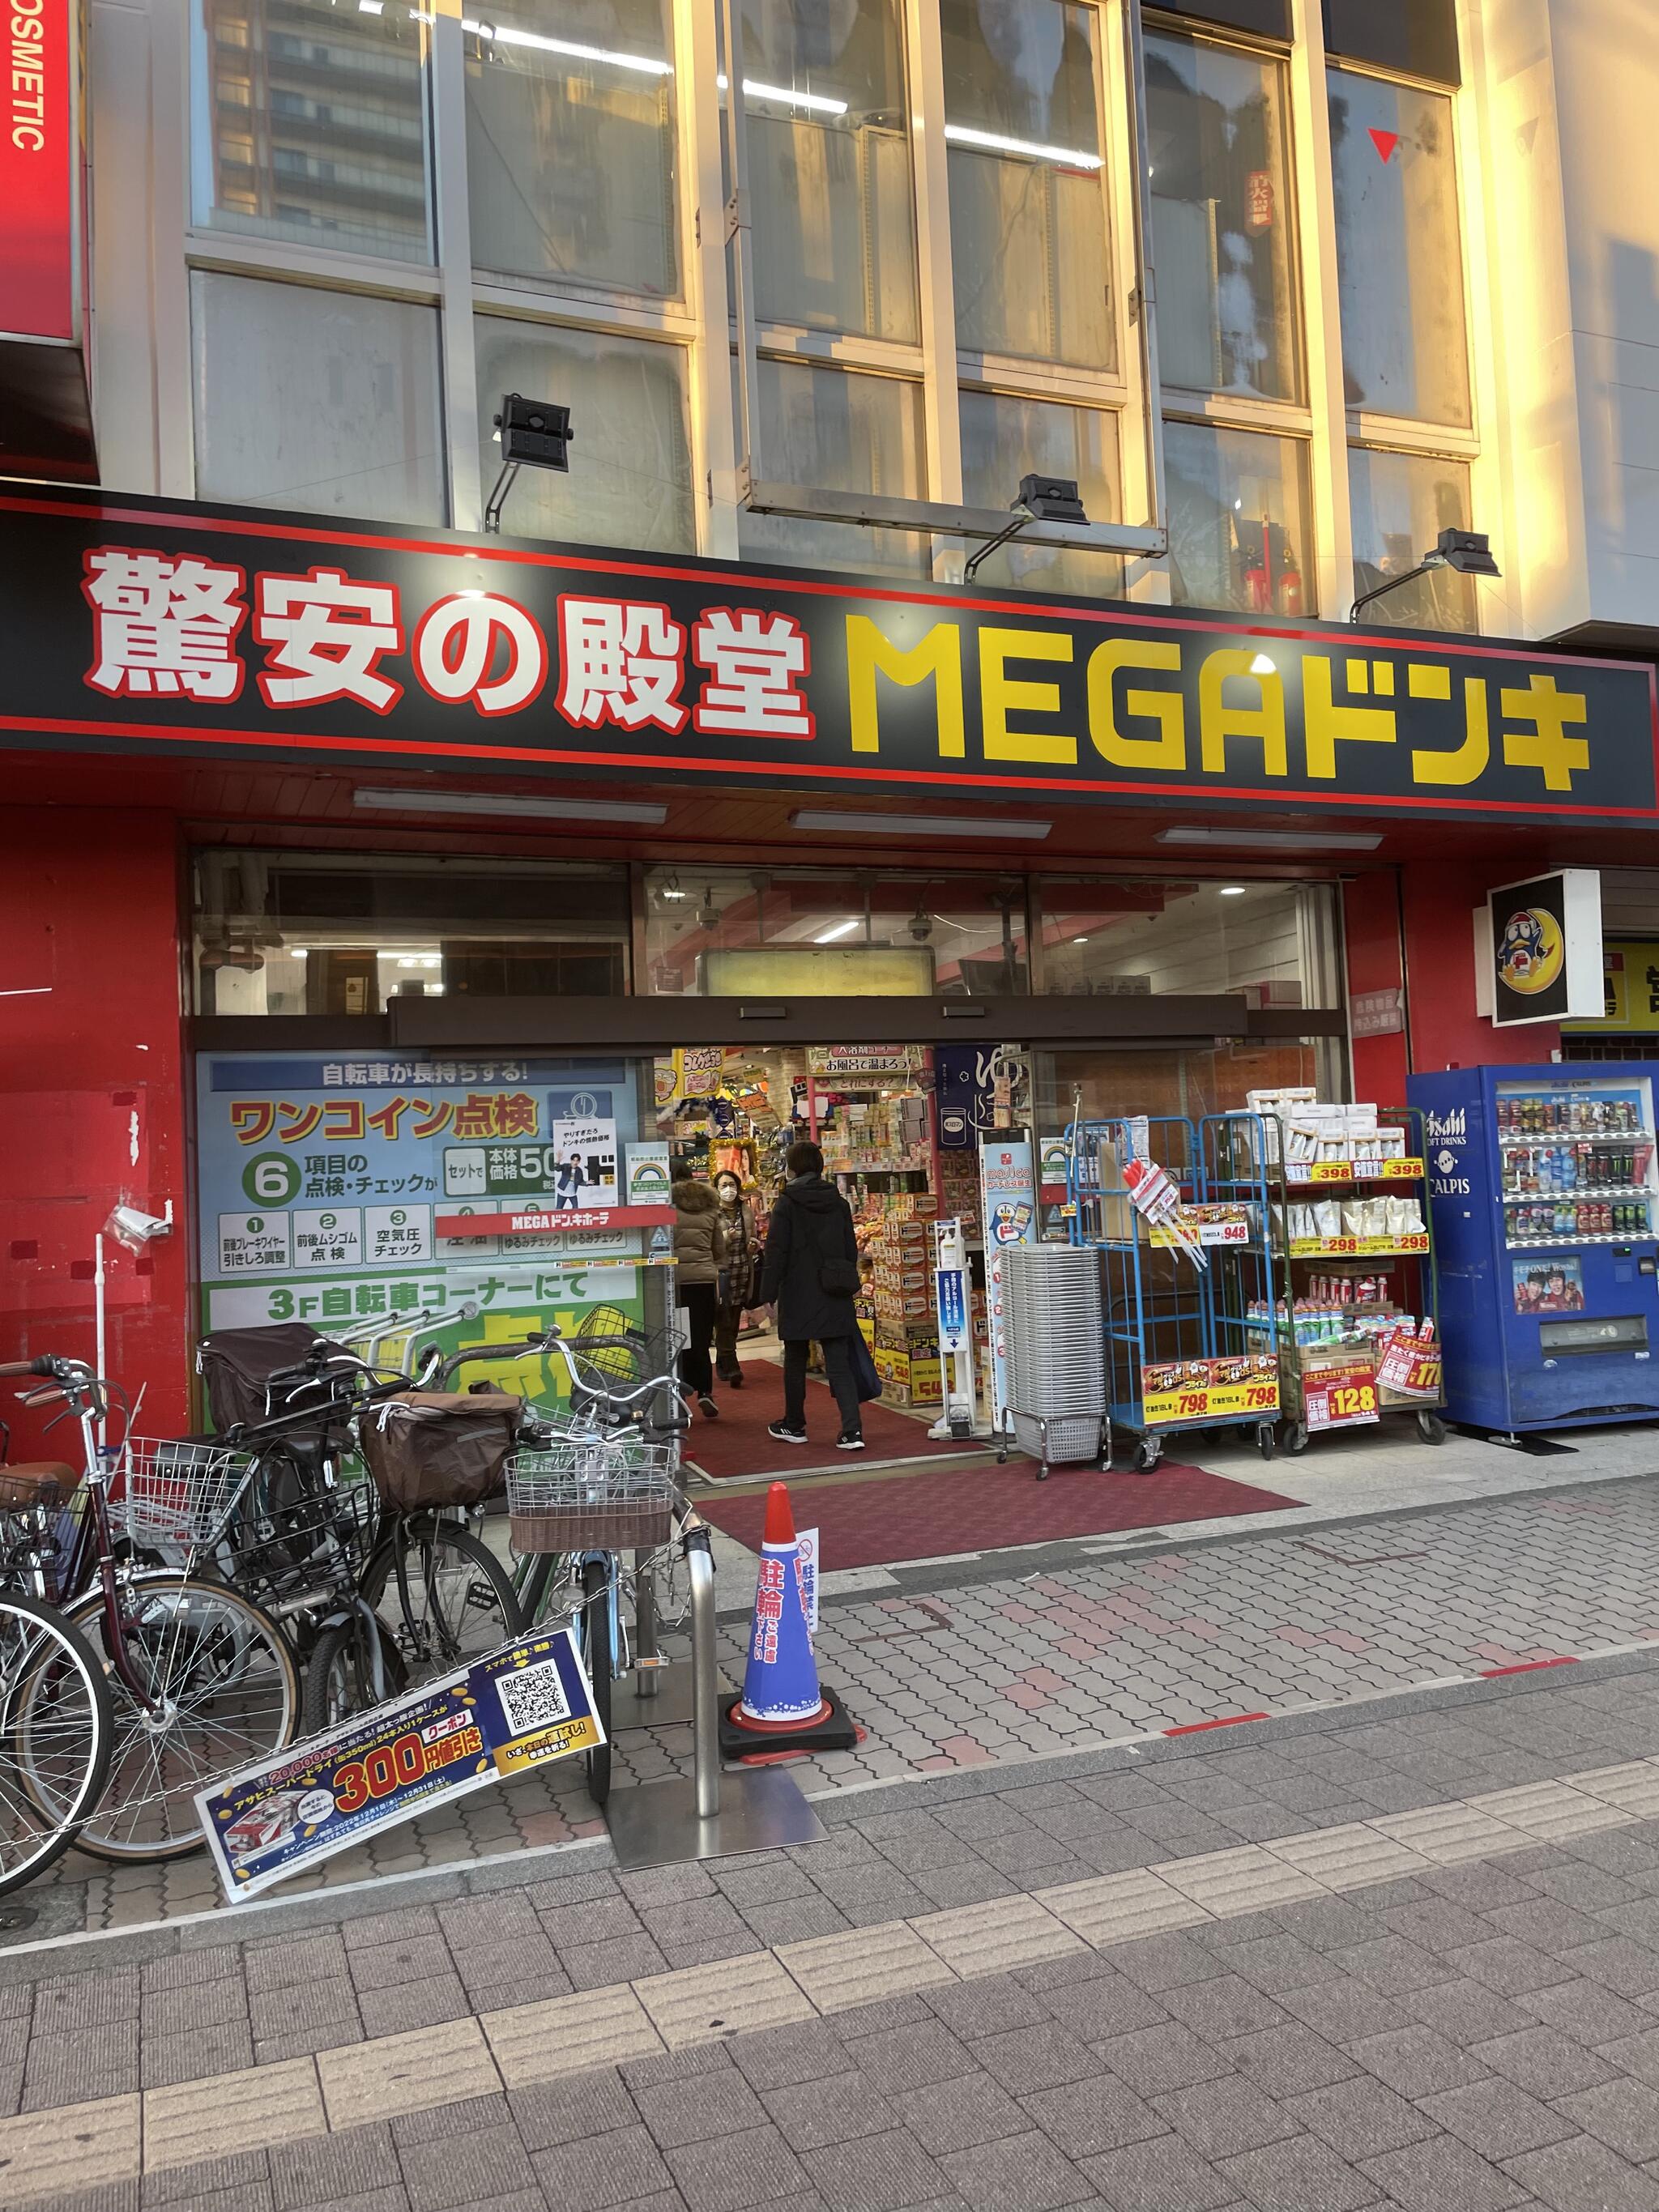 MEGAドン・キホーテ 武蔵小金井駅前店の代表写真5